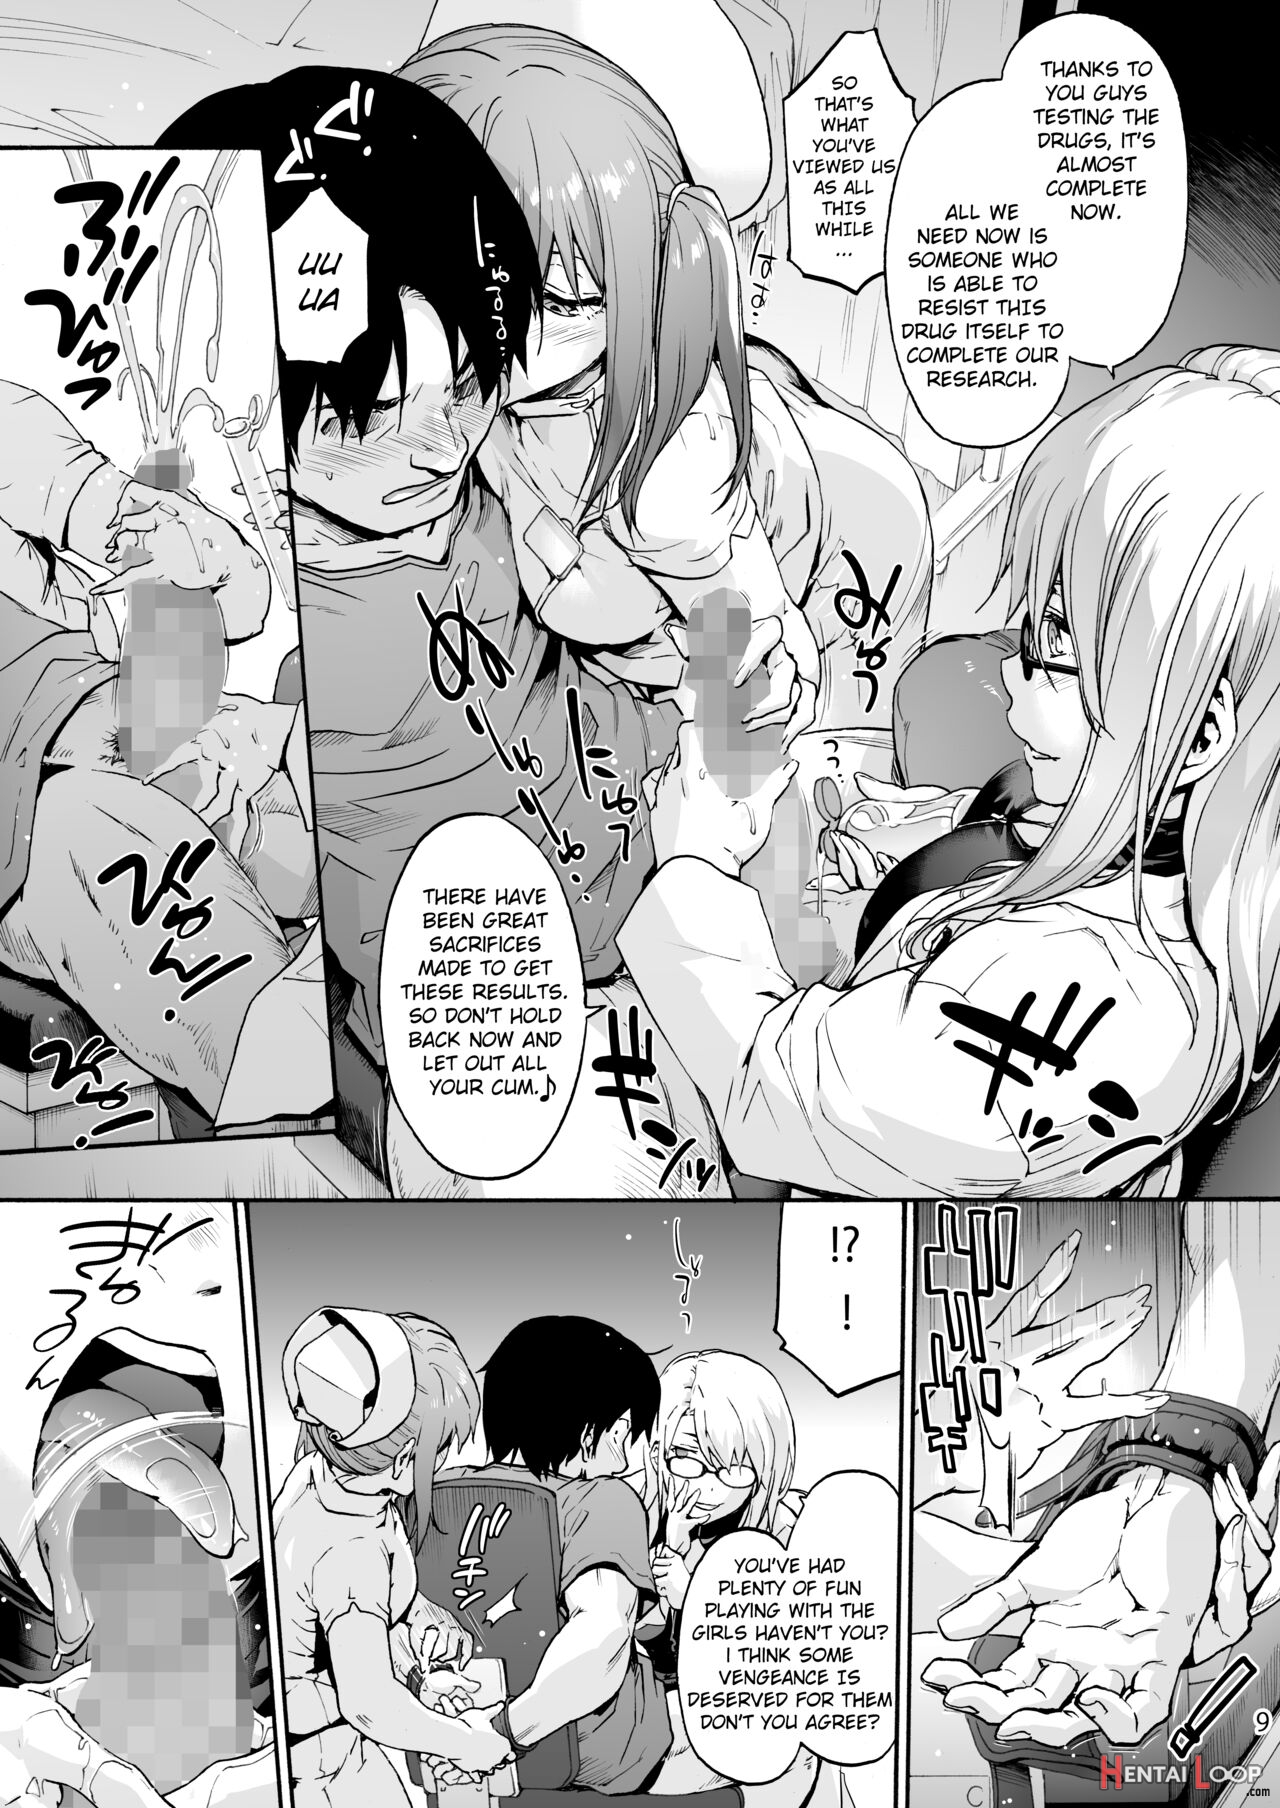 Miyasaka Hospital 5 - "do You Like Being Blamed?" page 11